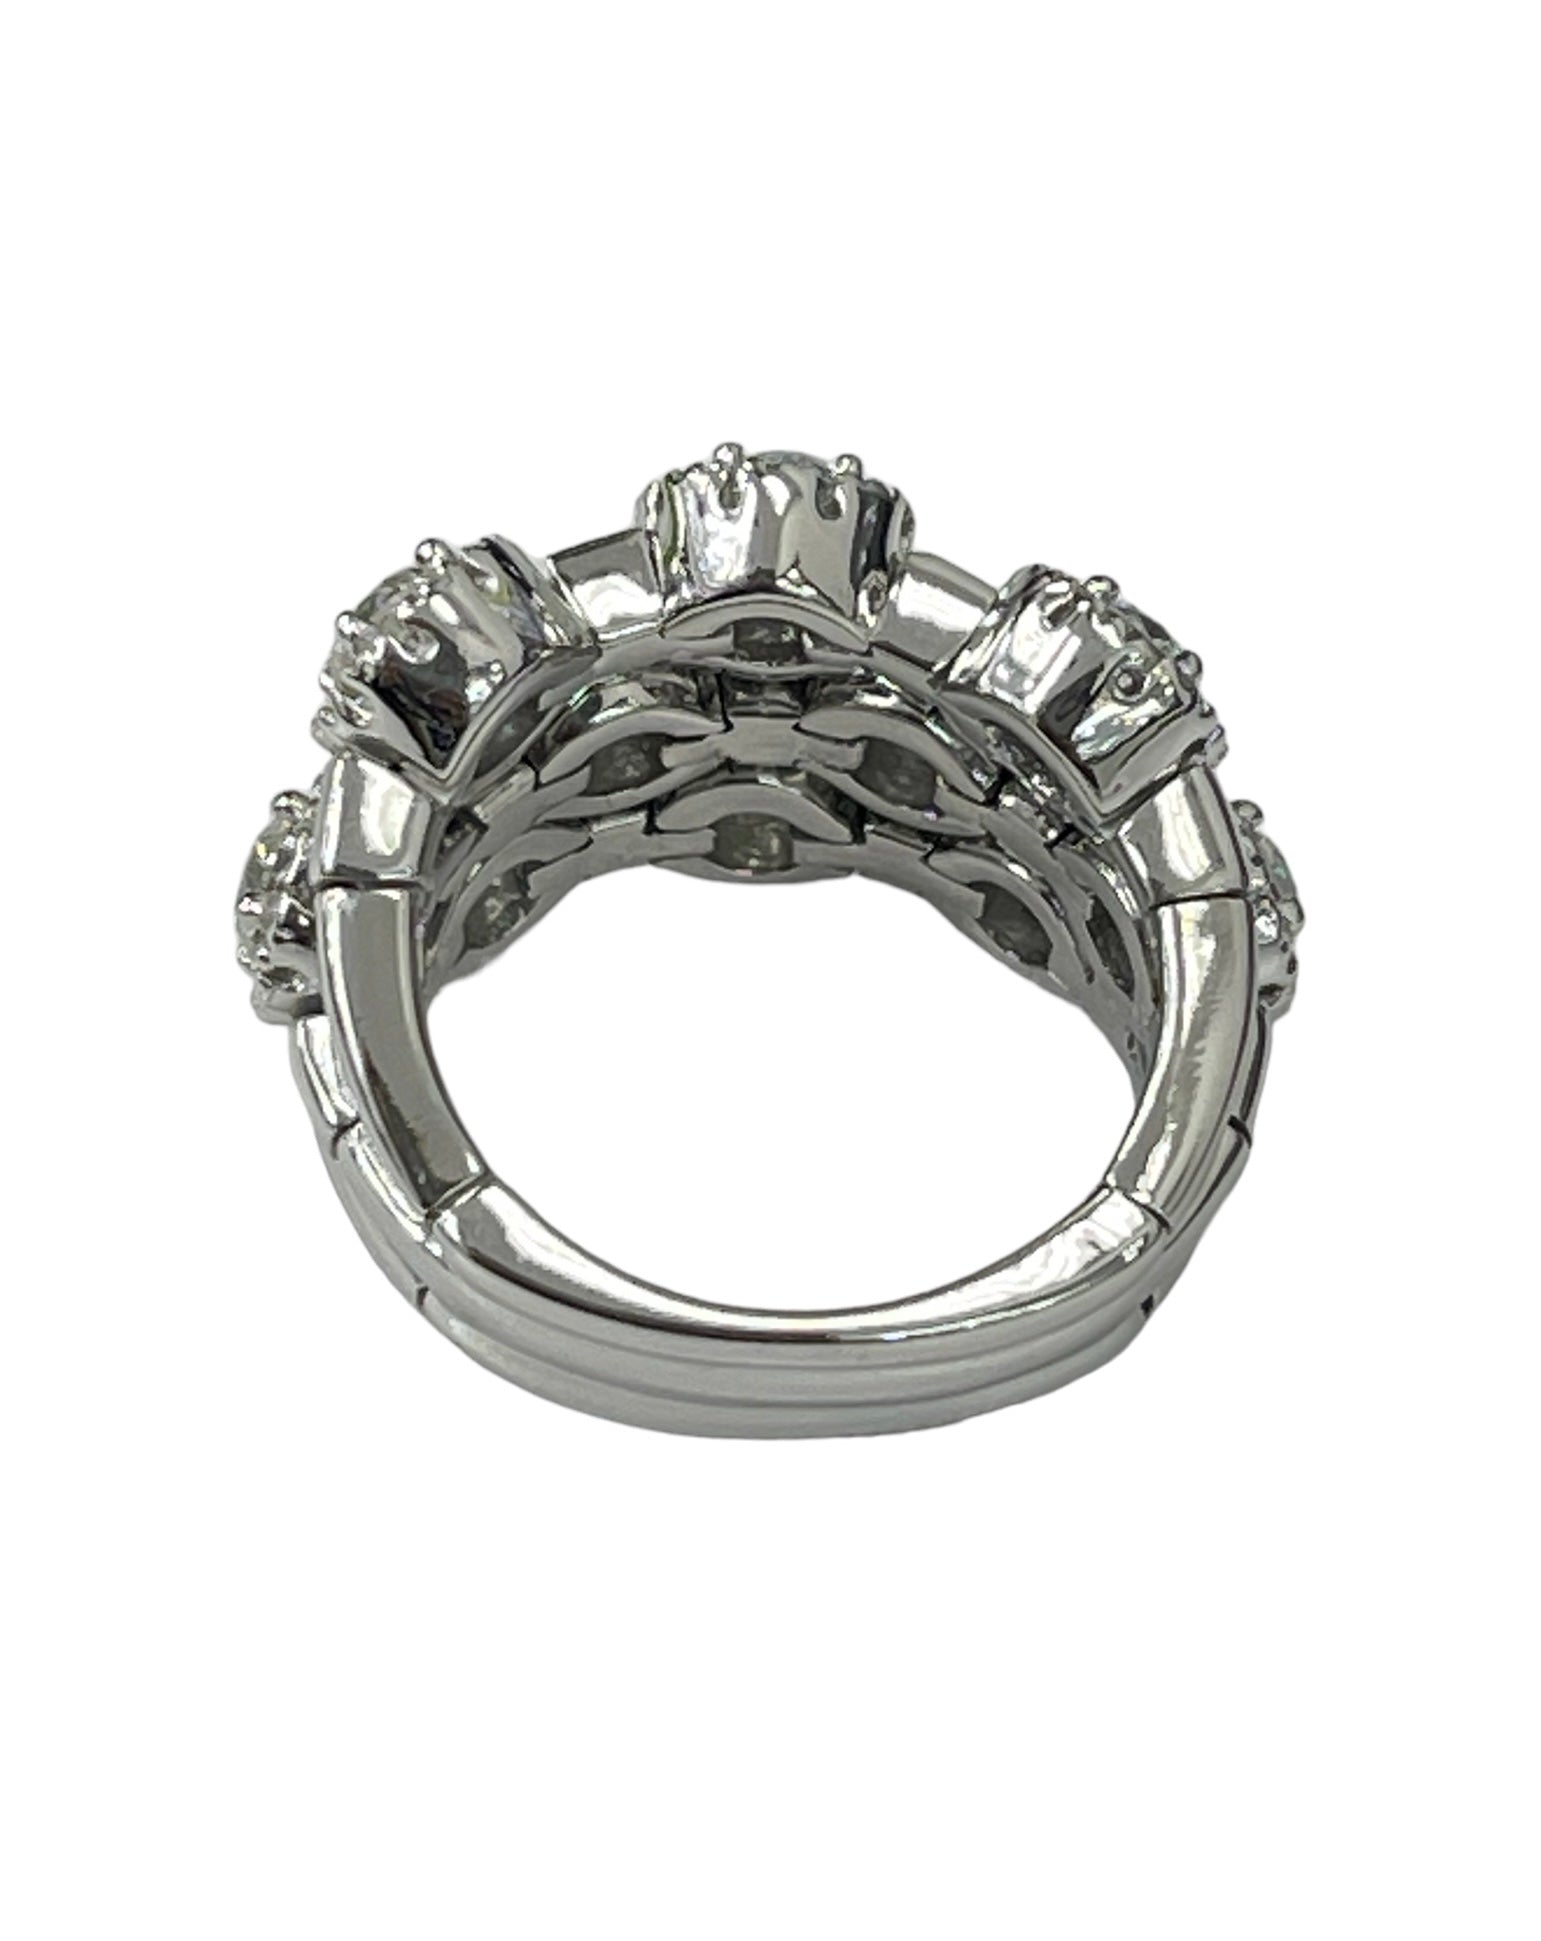 Sonia B Three Rows Diamond Ring Halo Setting White Gold 14kt